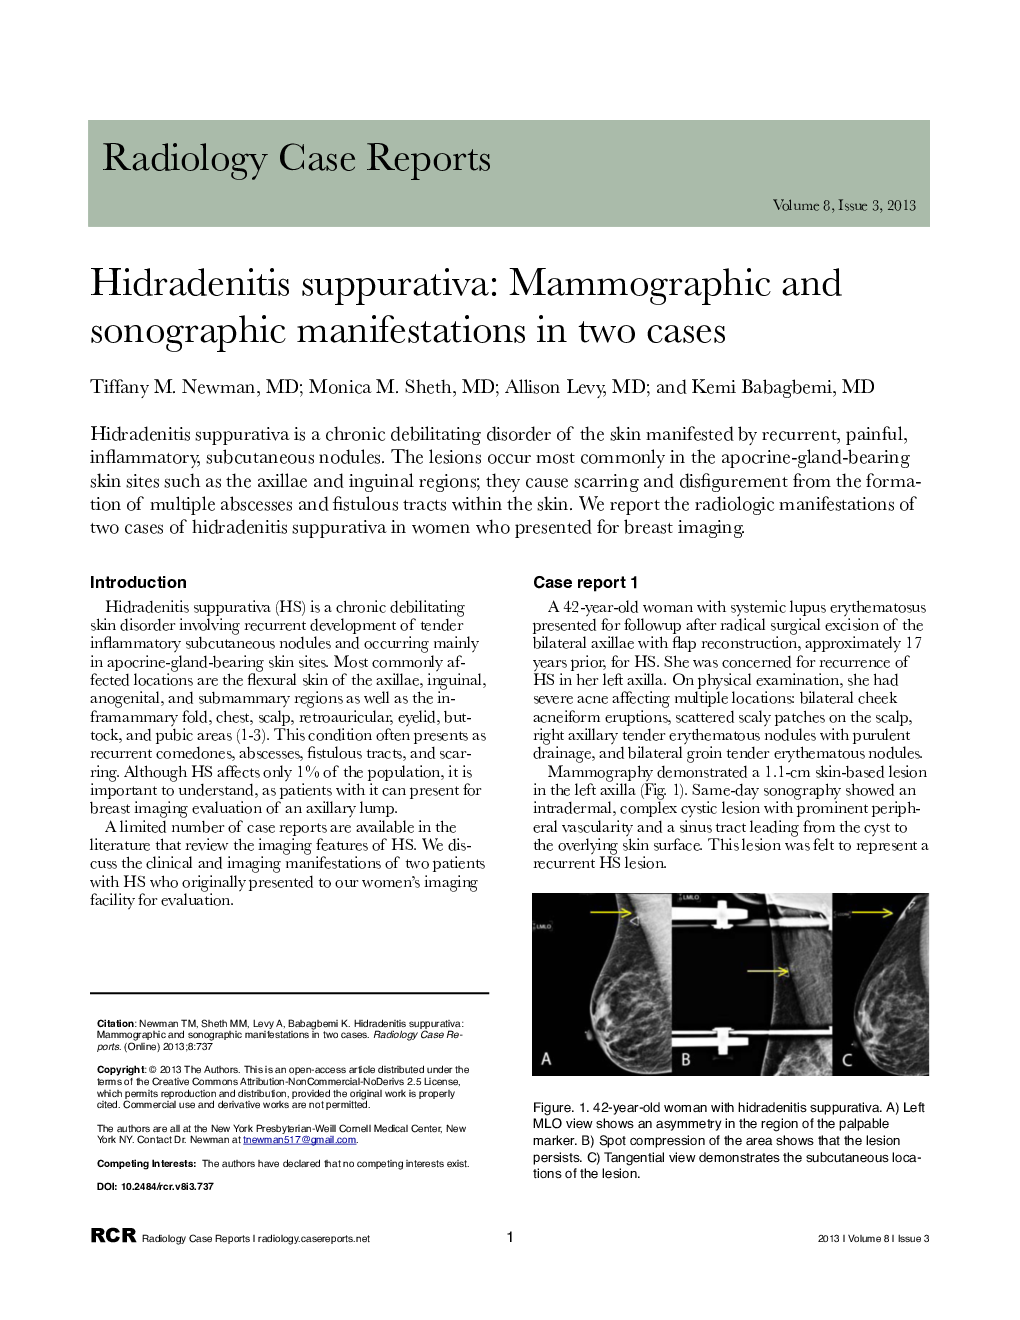 Hidradenitis suppurativa: Mammographic and sonographic manifestations in two cases